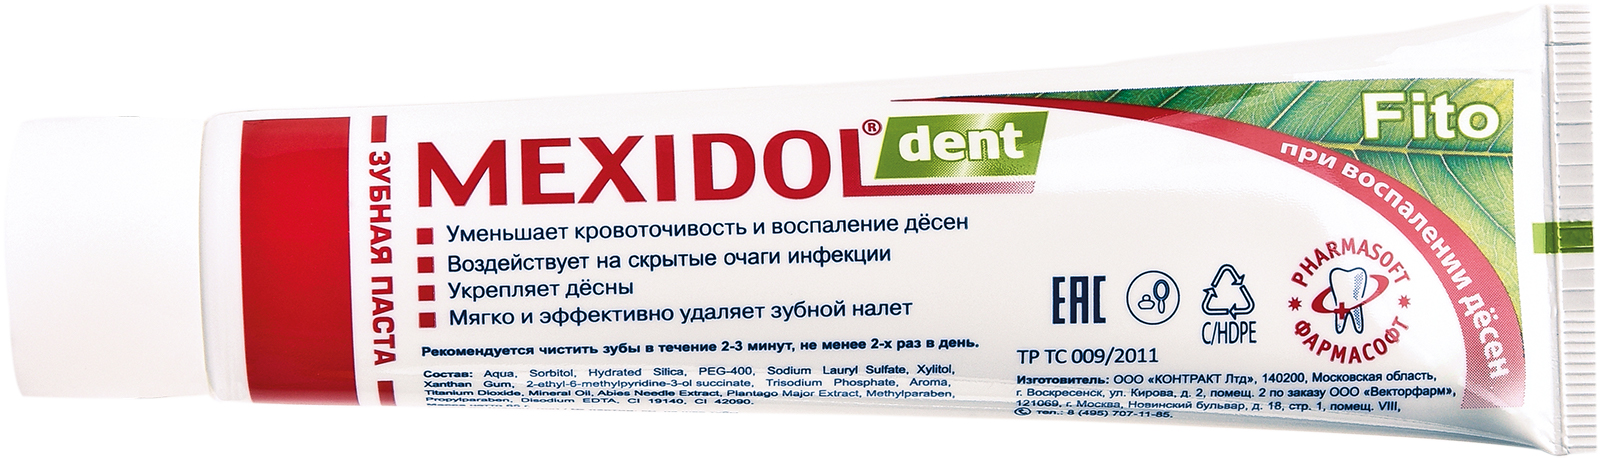 Мексидол Дент Фито, зубная паста, 100 г мексидол дент фито зубная паста 100 г